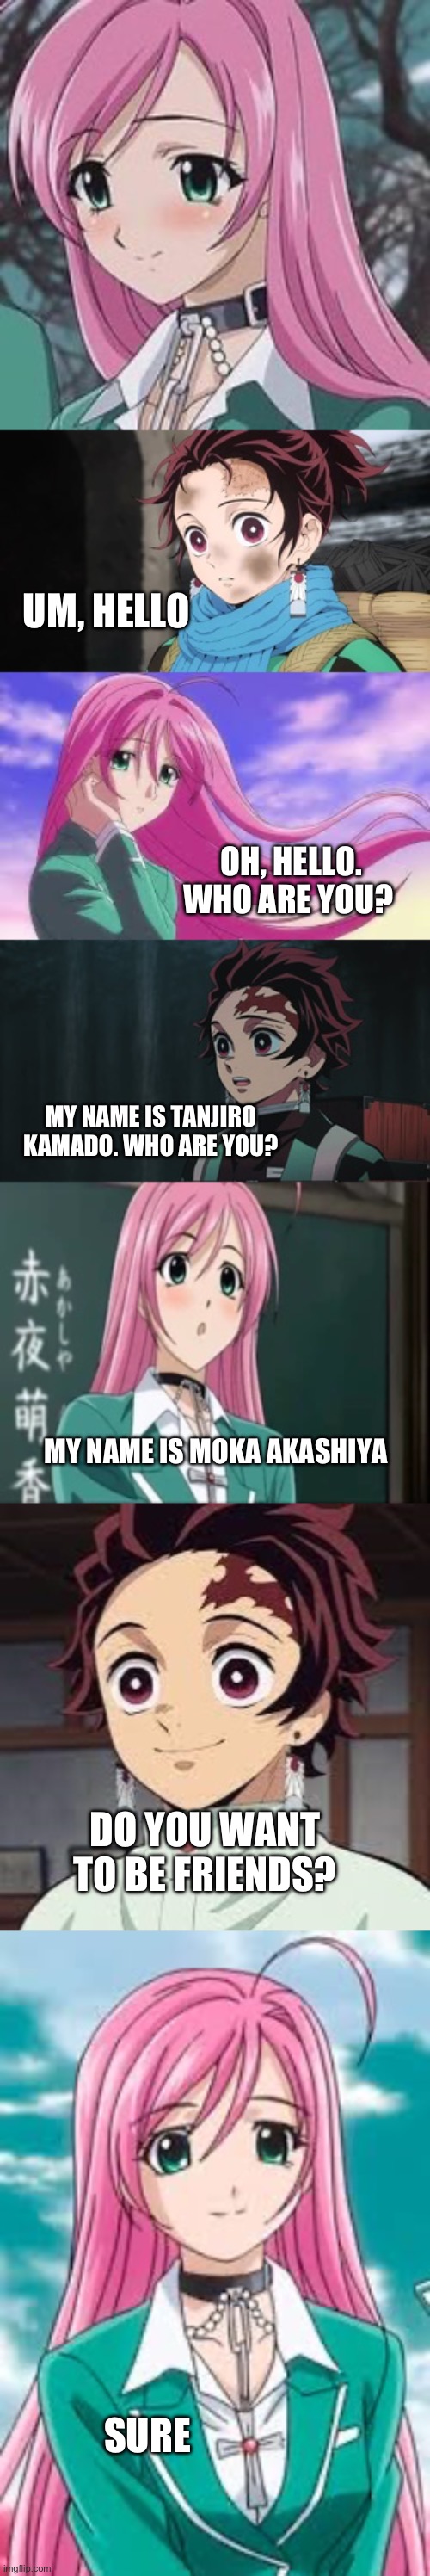 Tanjiro Kamado meet Moka Akashiya | UM, HELLO; OH, HELLO. WHO ARE YOU? MY NAME IS TANJIRO KAMADO. WHO ARE YOU? MY NAME IS MOKA AKASHIYA; DO YOU WANT TO BE FRIENDS? SURE | image tagged in anime | made w/ Imgflip meme maker